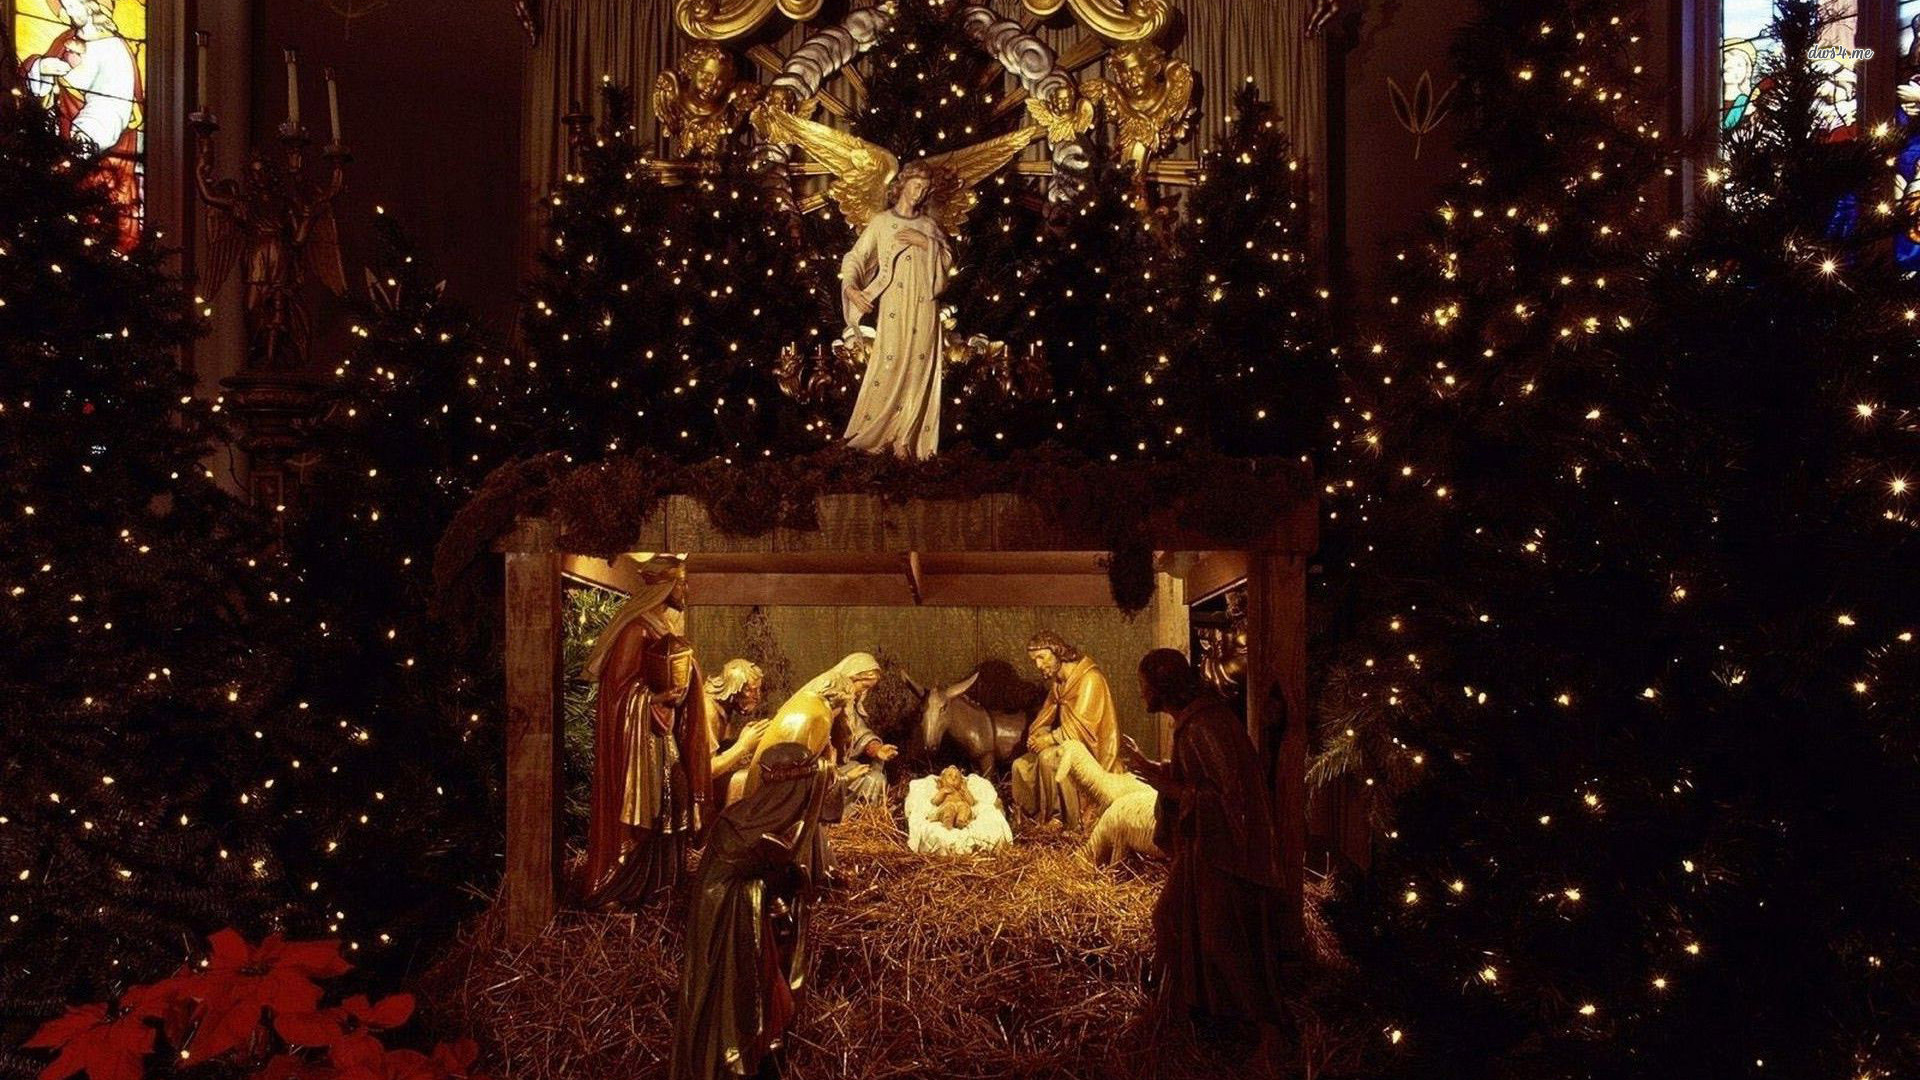 Nativity scene desktop wallpaper